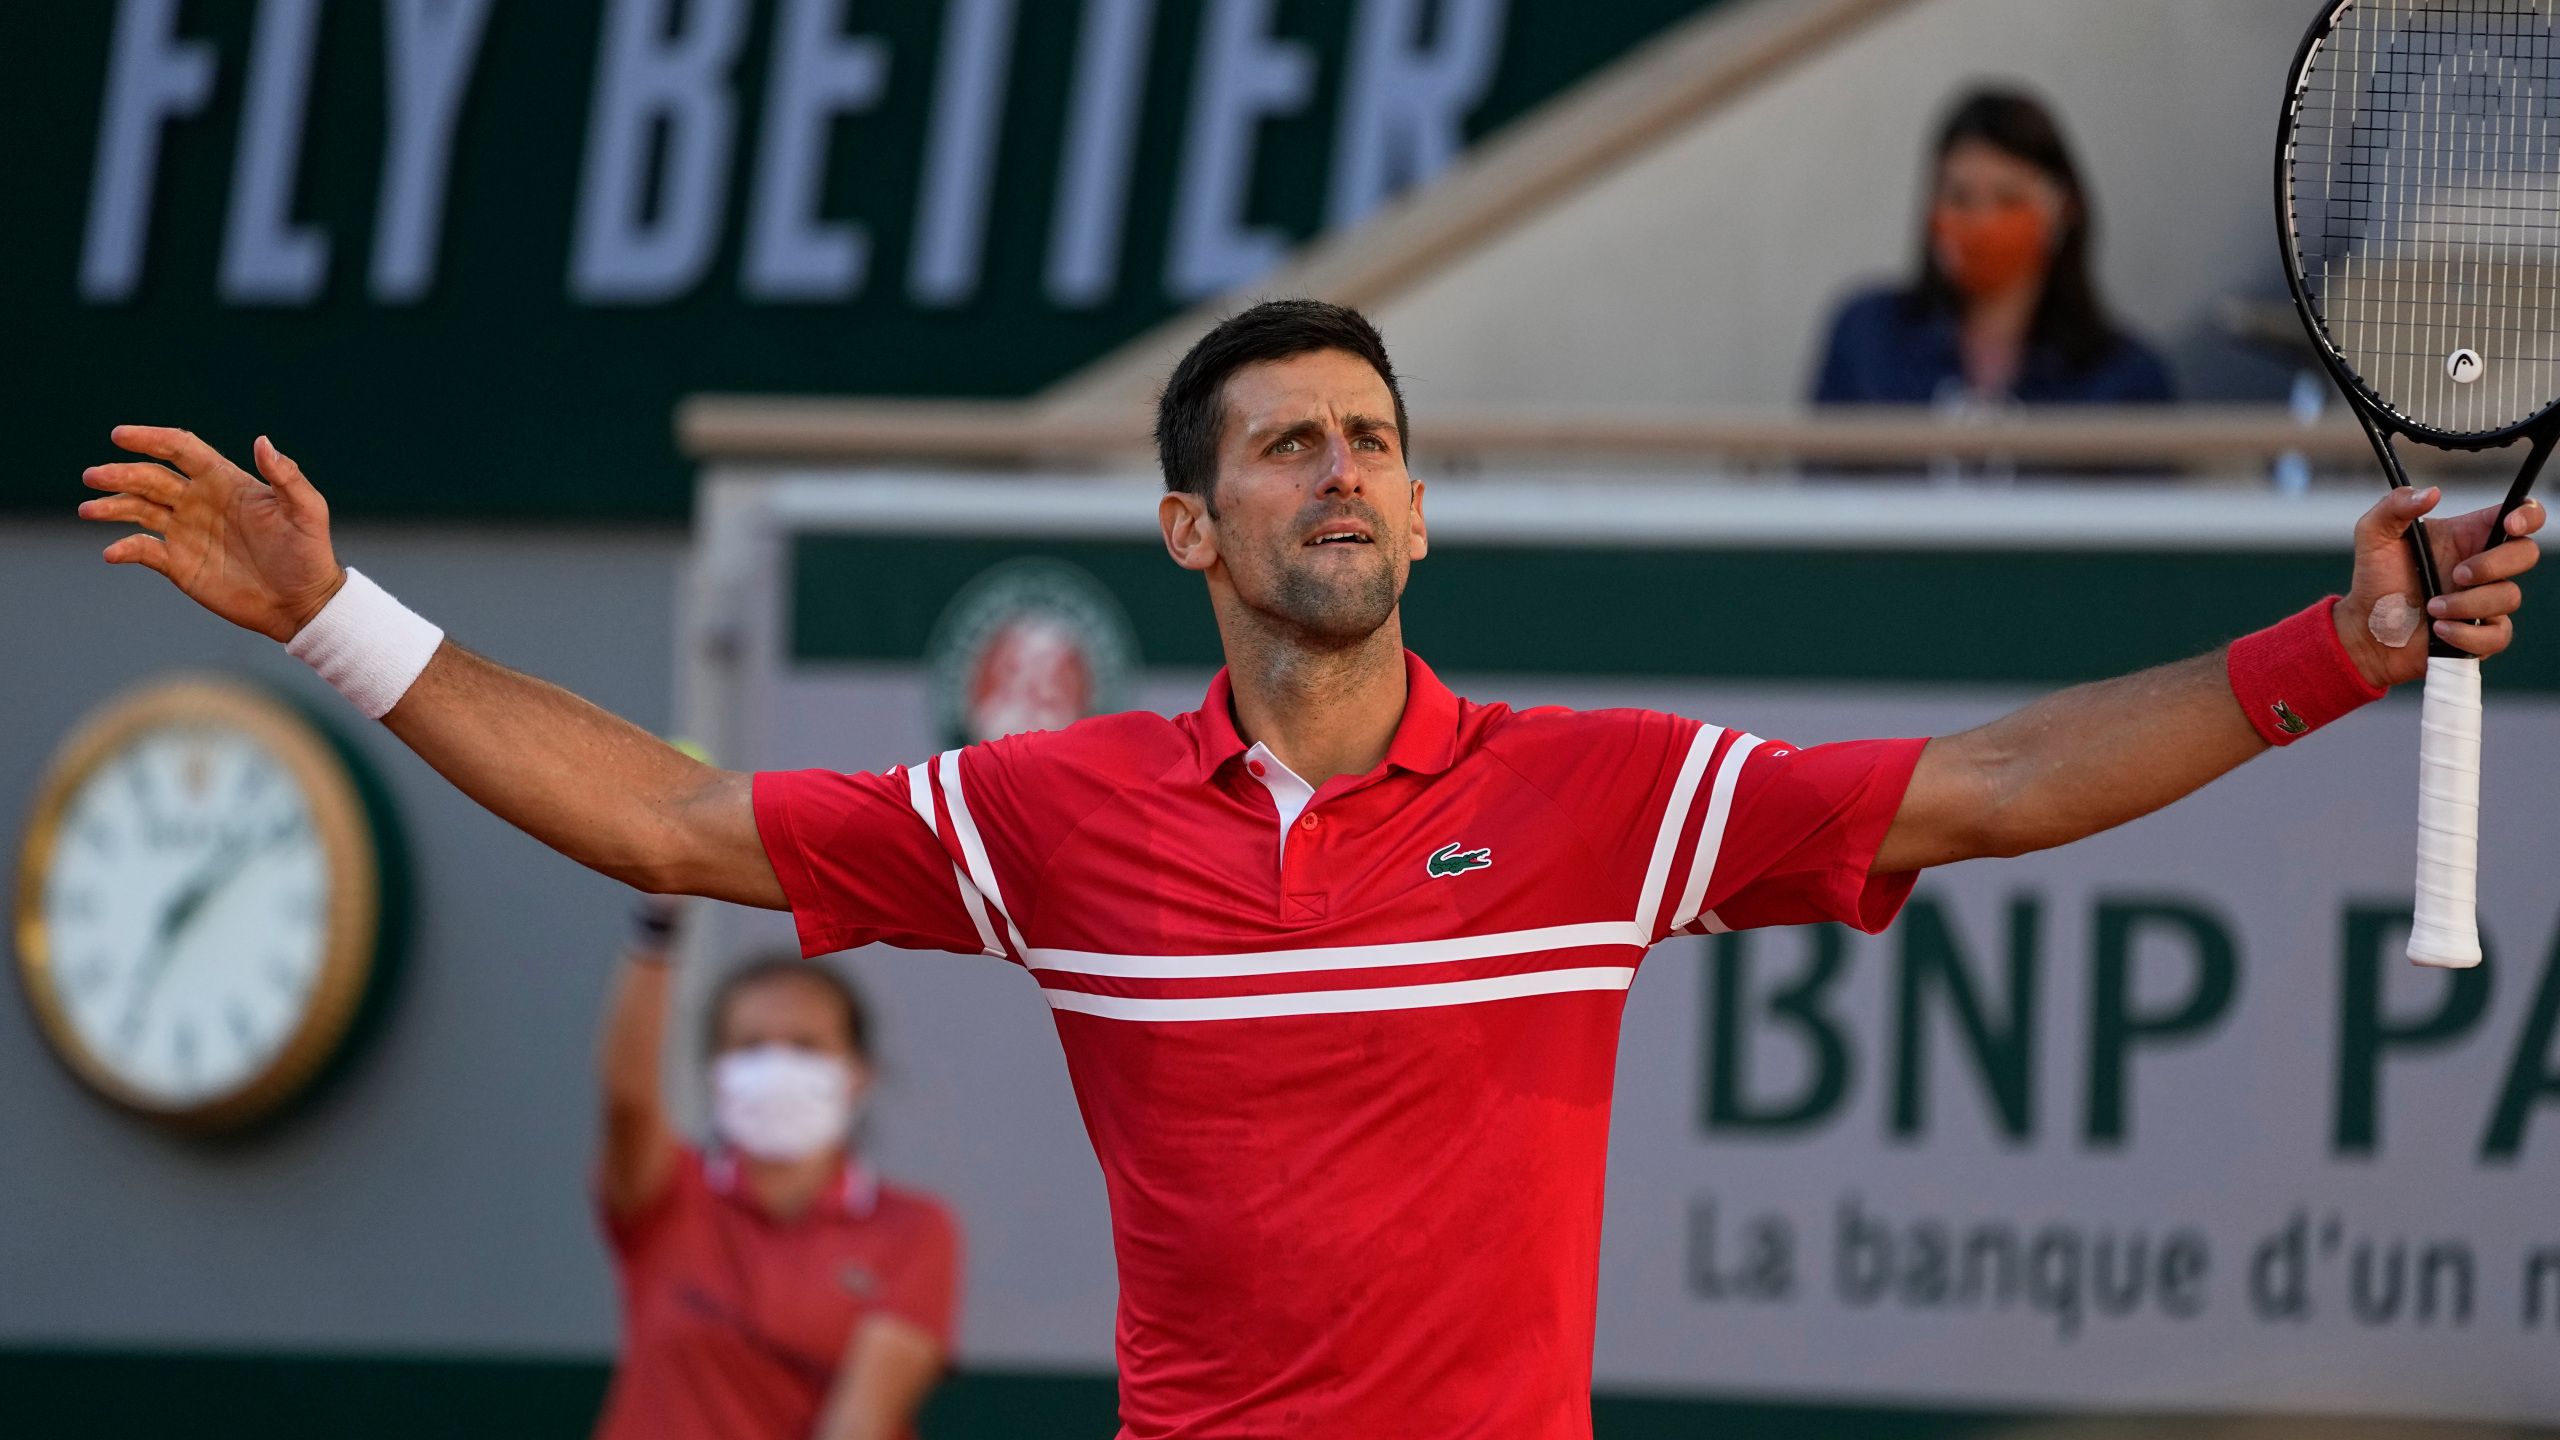 Djokovic tops Tsitsipas in 5 at French Open for 19th major. KRQE News 13